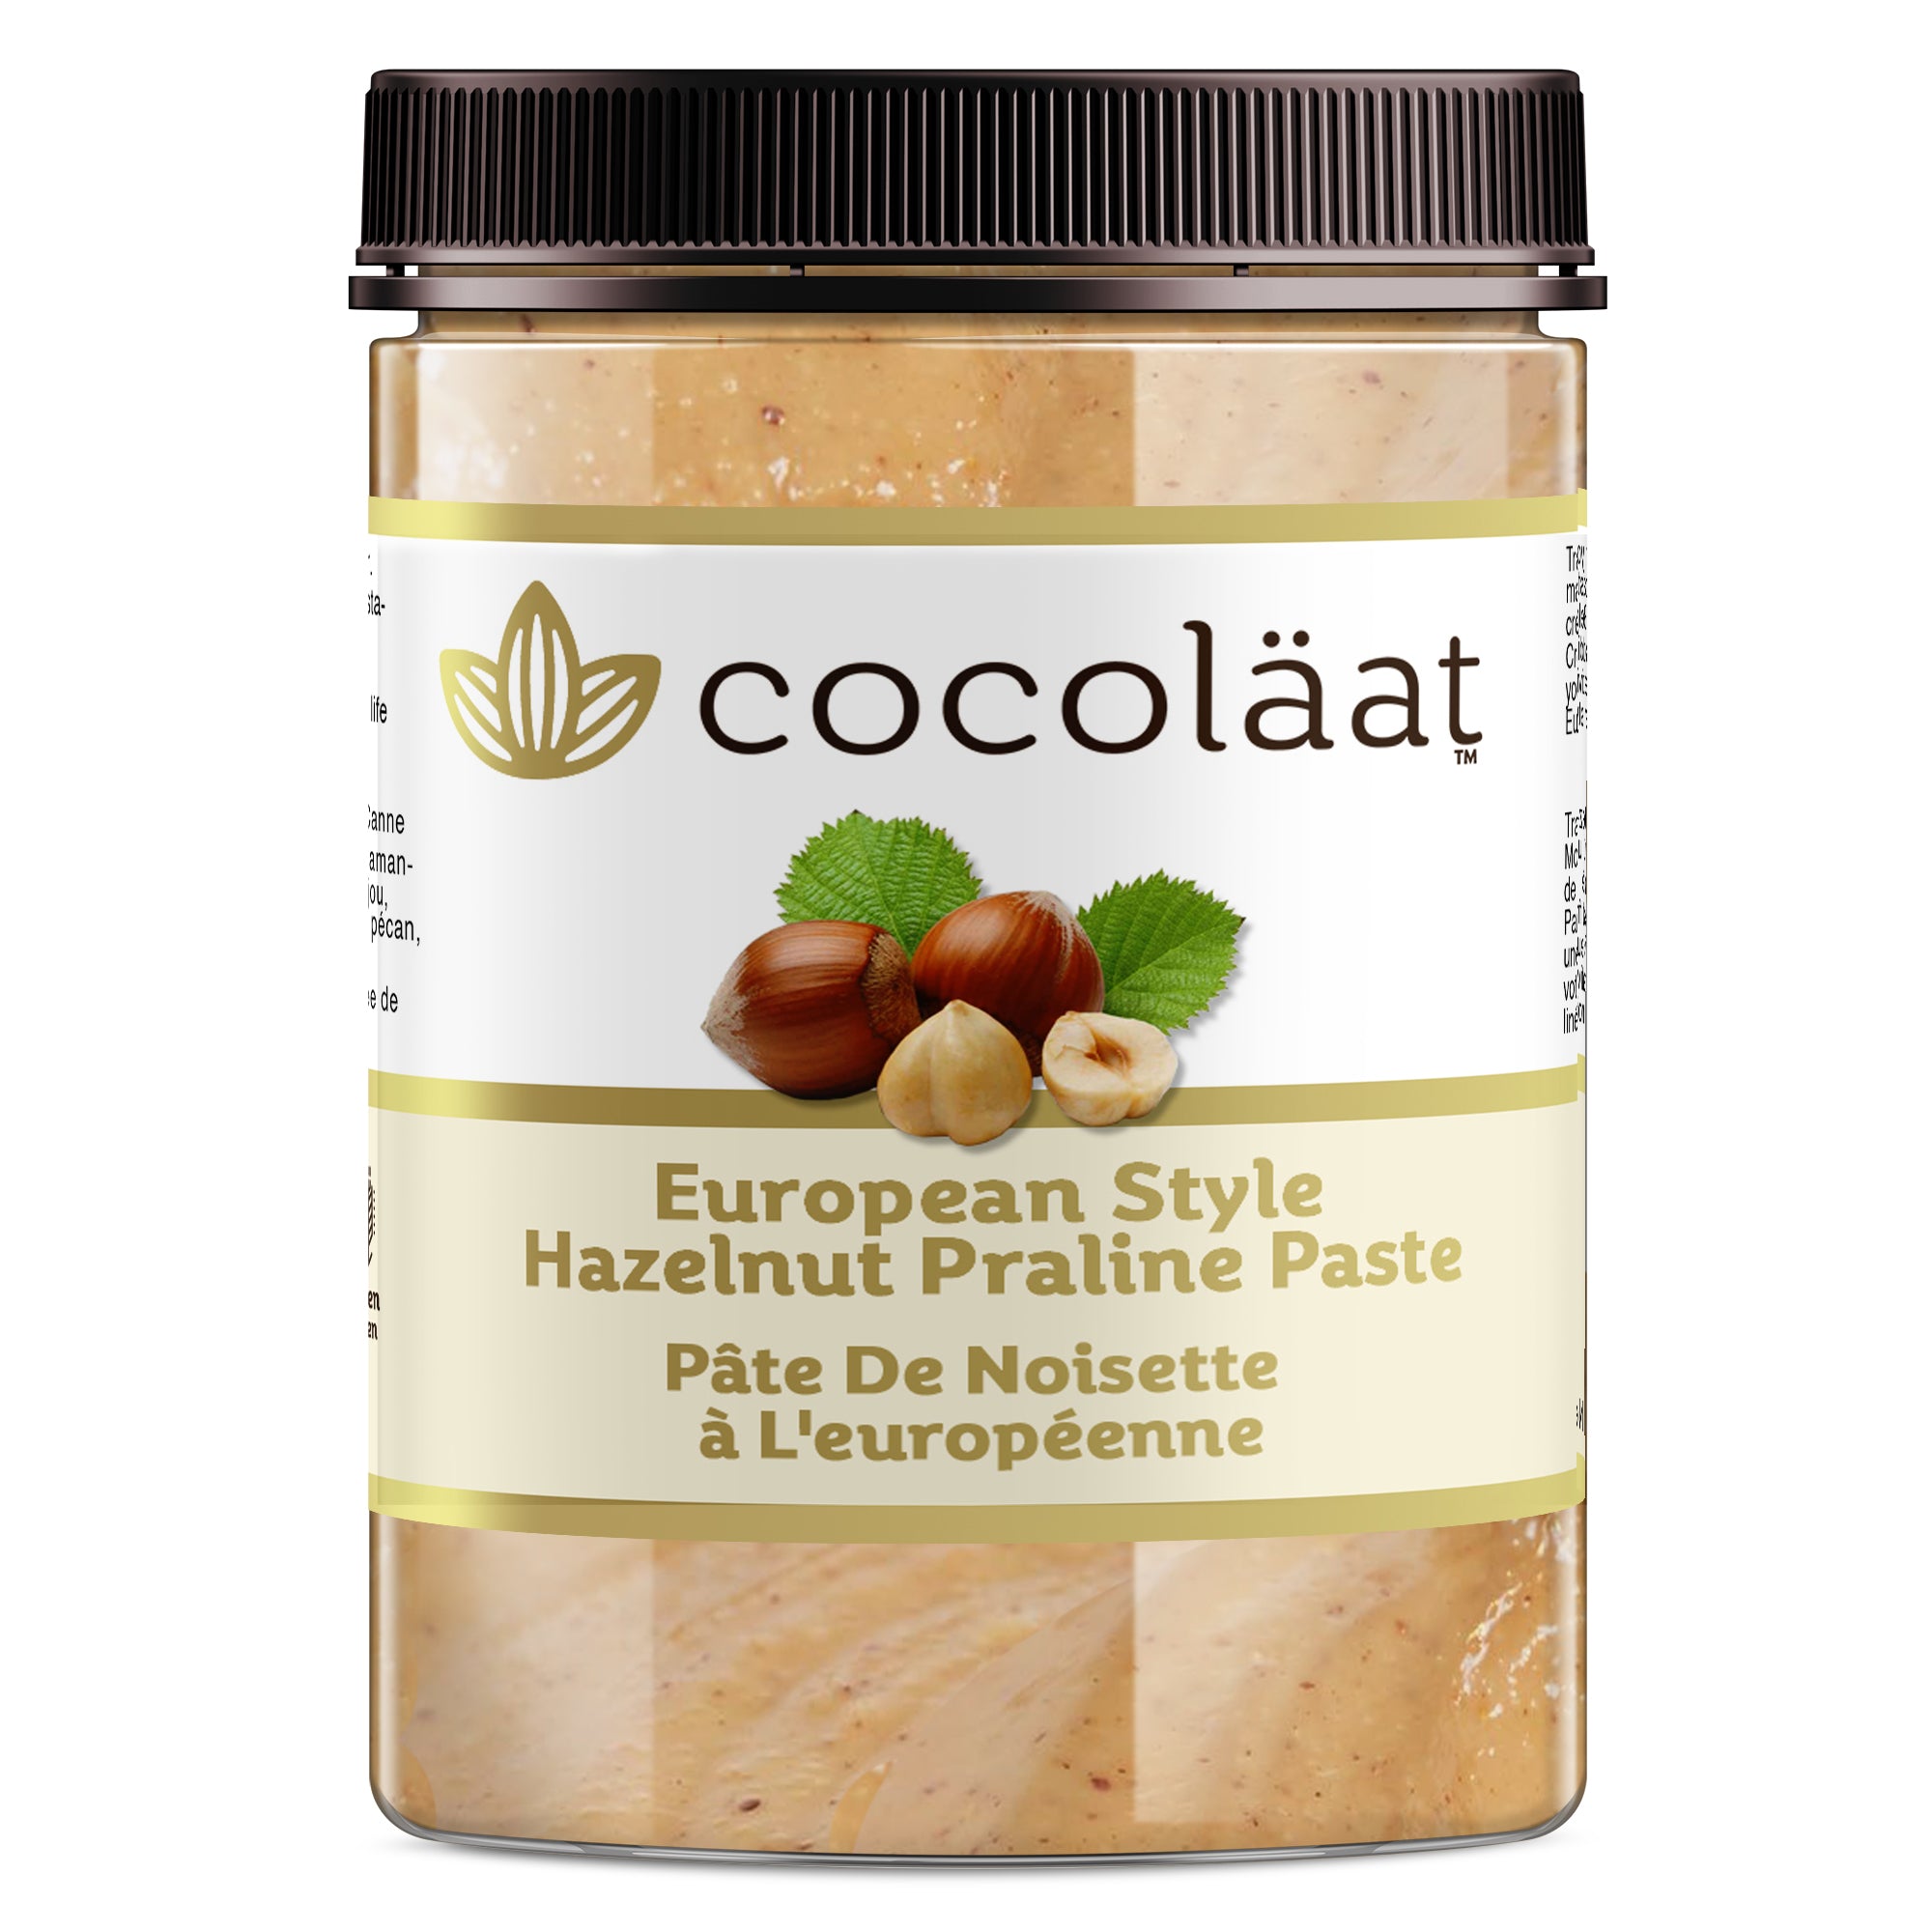 Cocoläat European Style Hazelnut Praline Paste | Premium European Hazelnuts | 10 oz/284 g Resealable Jar